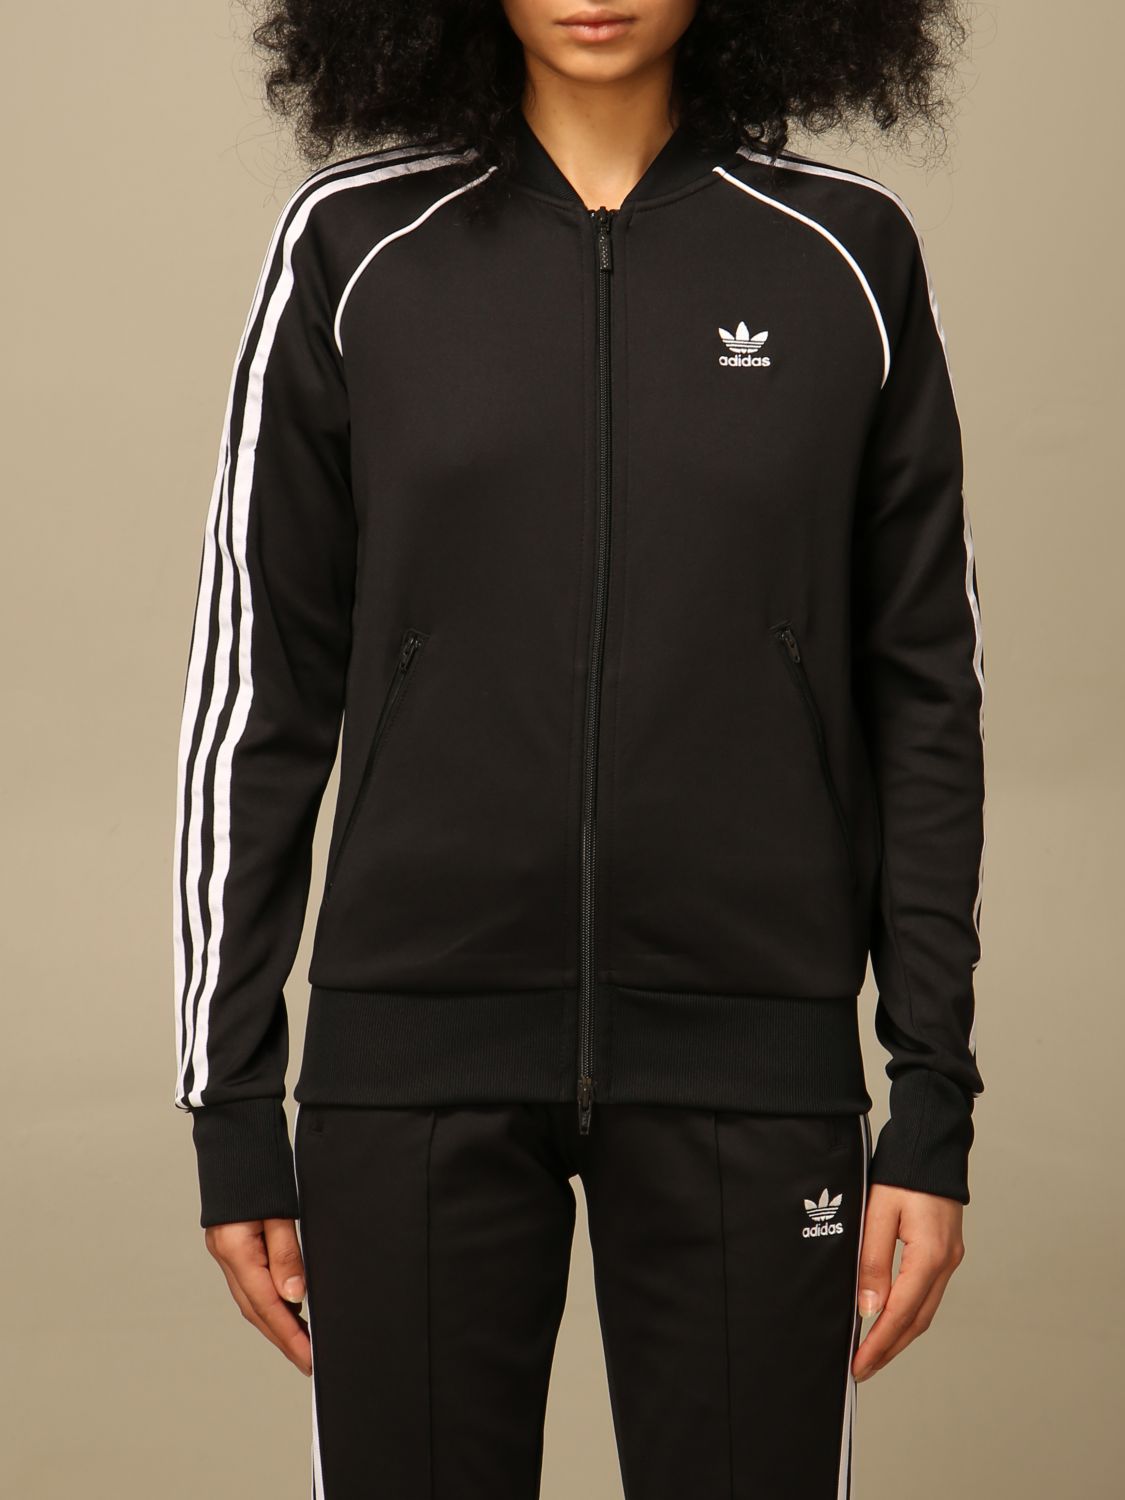 Descompostura Gastos Egipto ADIDAS ORIGINALS: sweatshirt with logo - Black | Adidas Originals jacket  GD2374 online on GIGLIO.COM